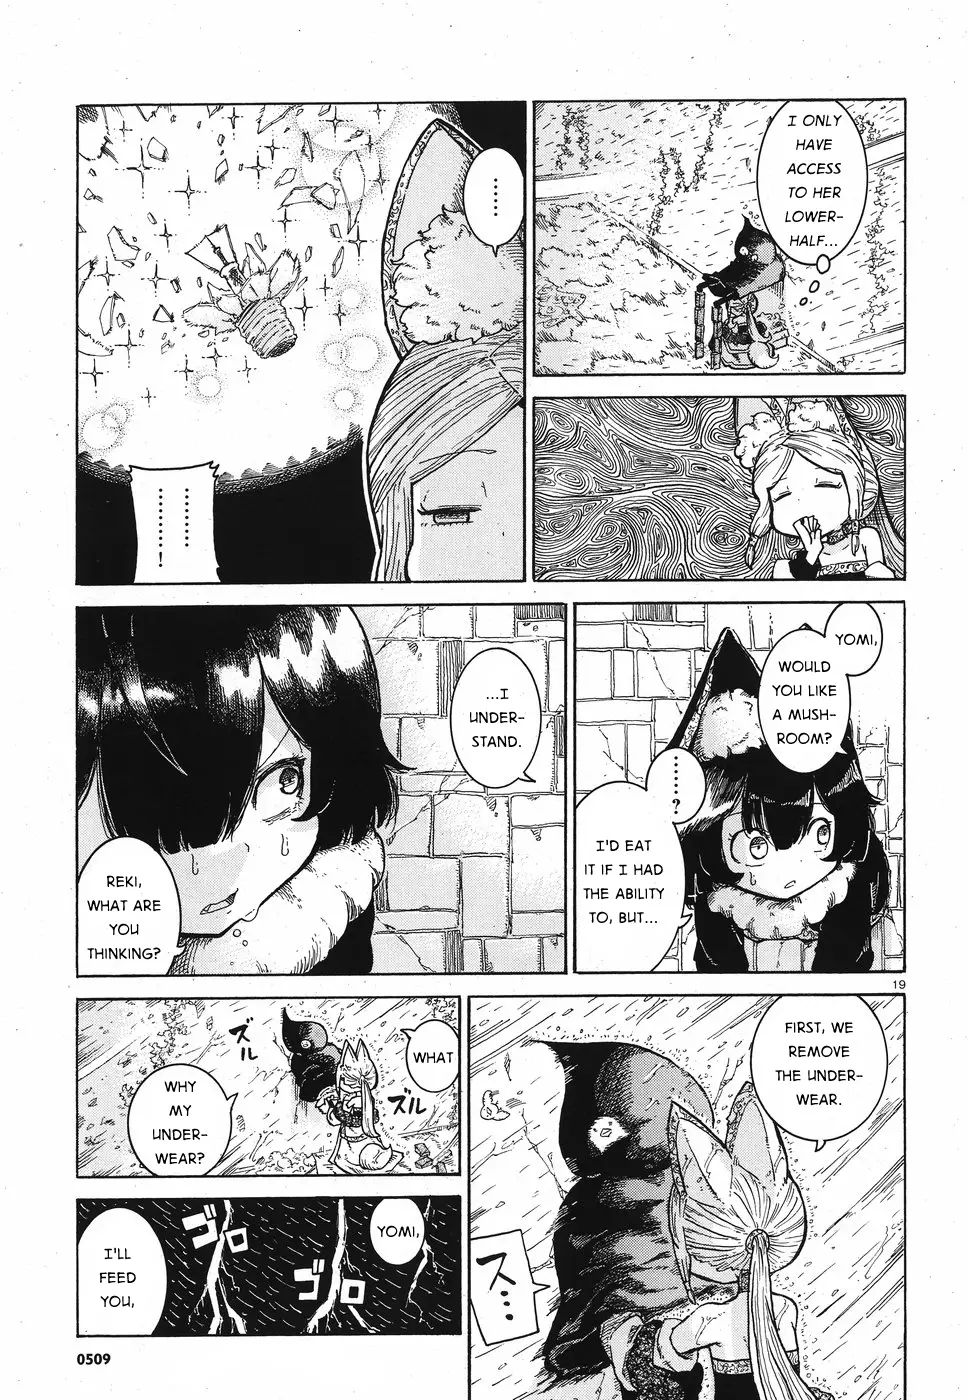 Reki Yomi - 8 page 19